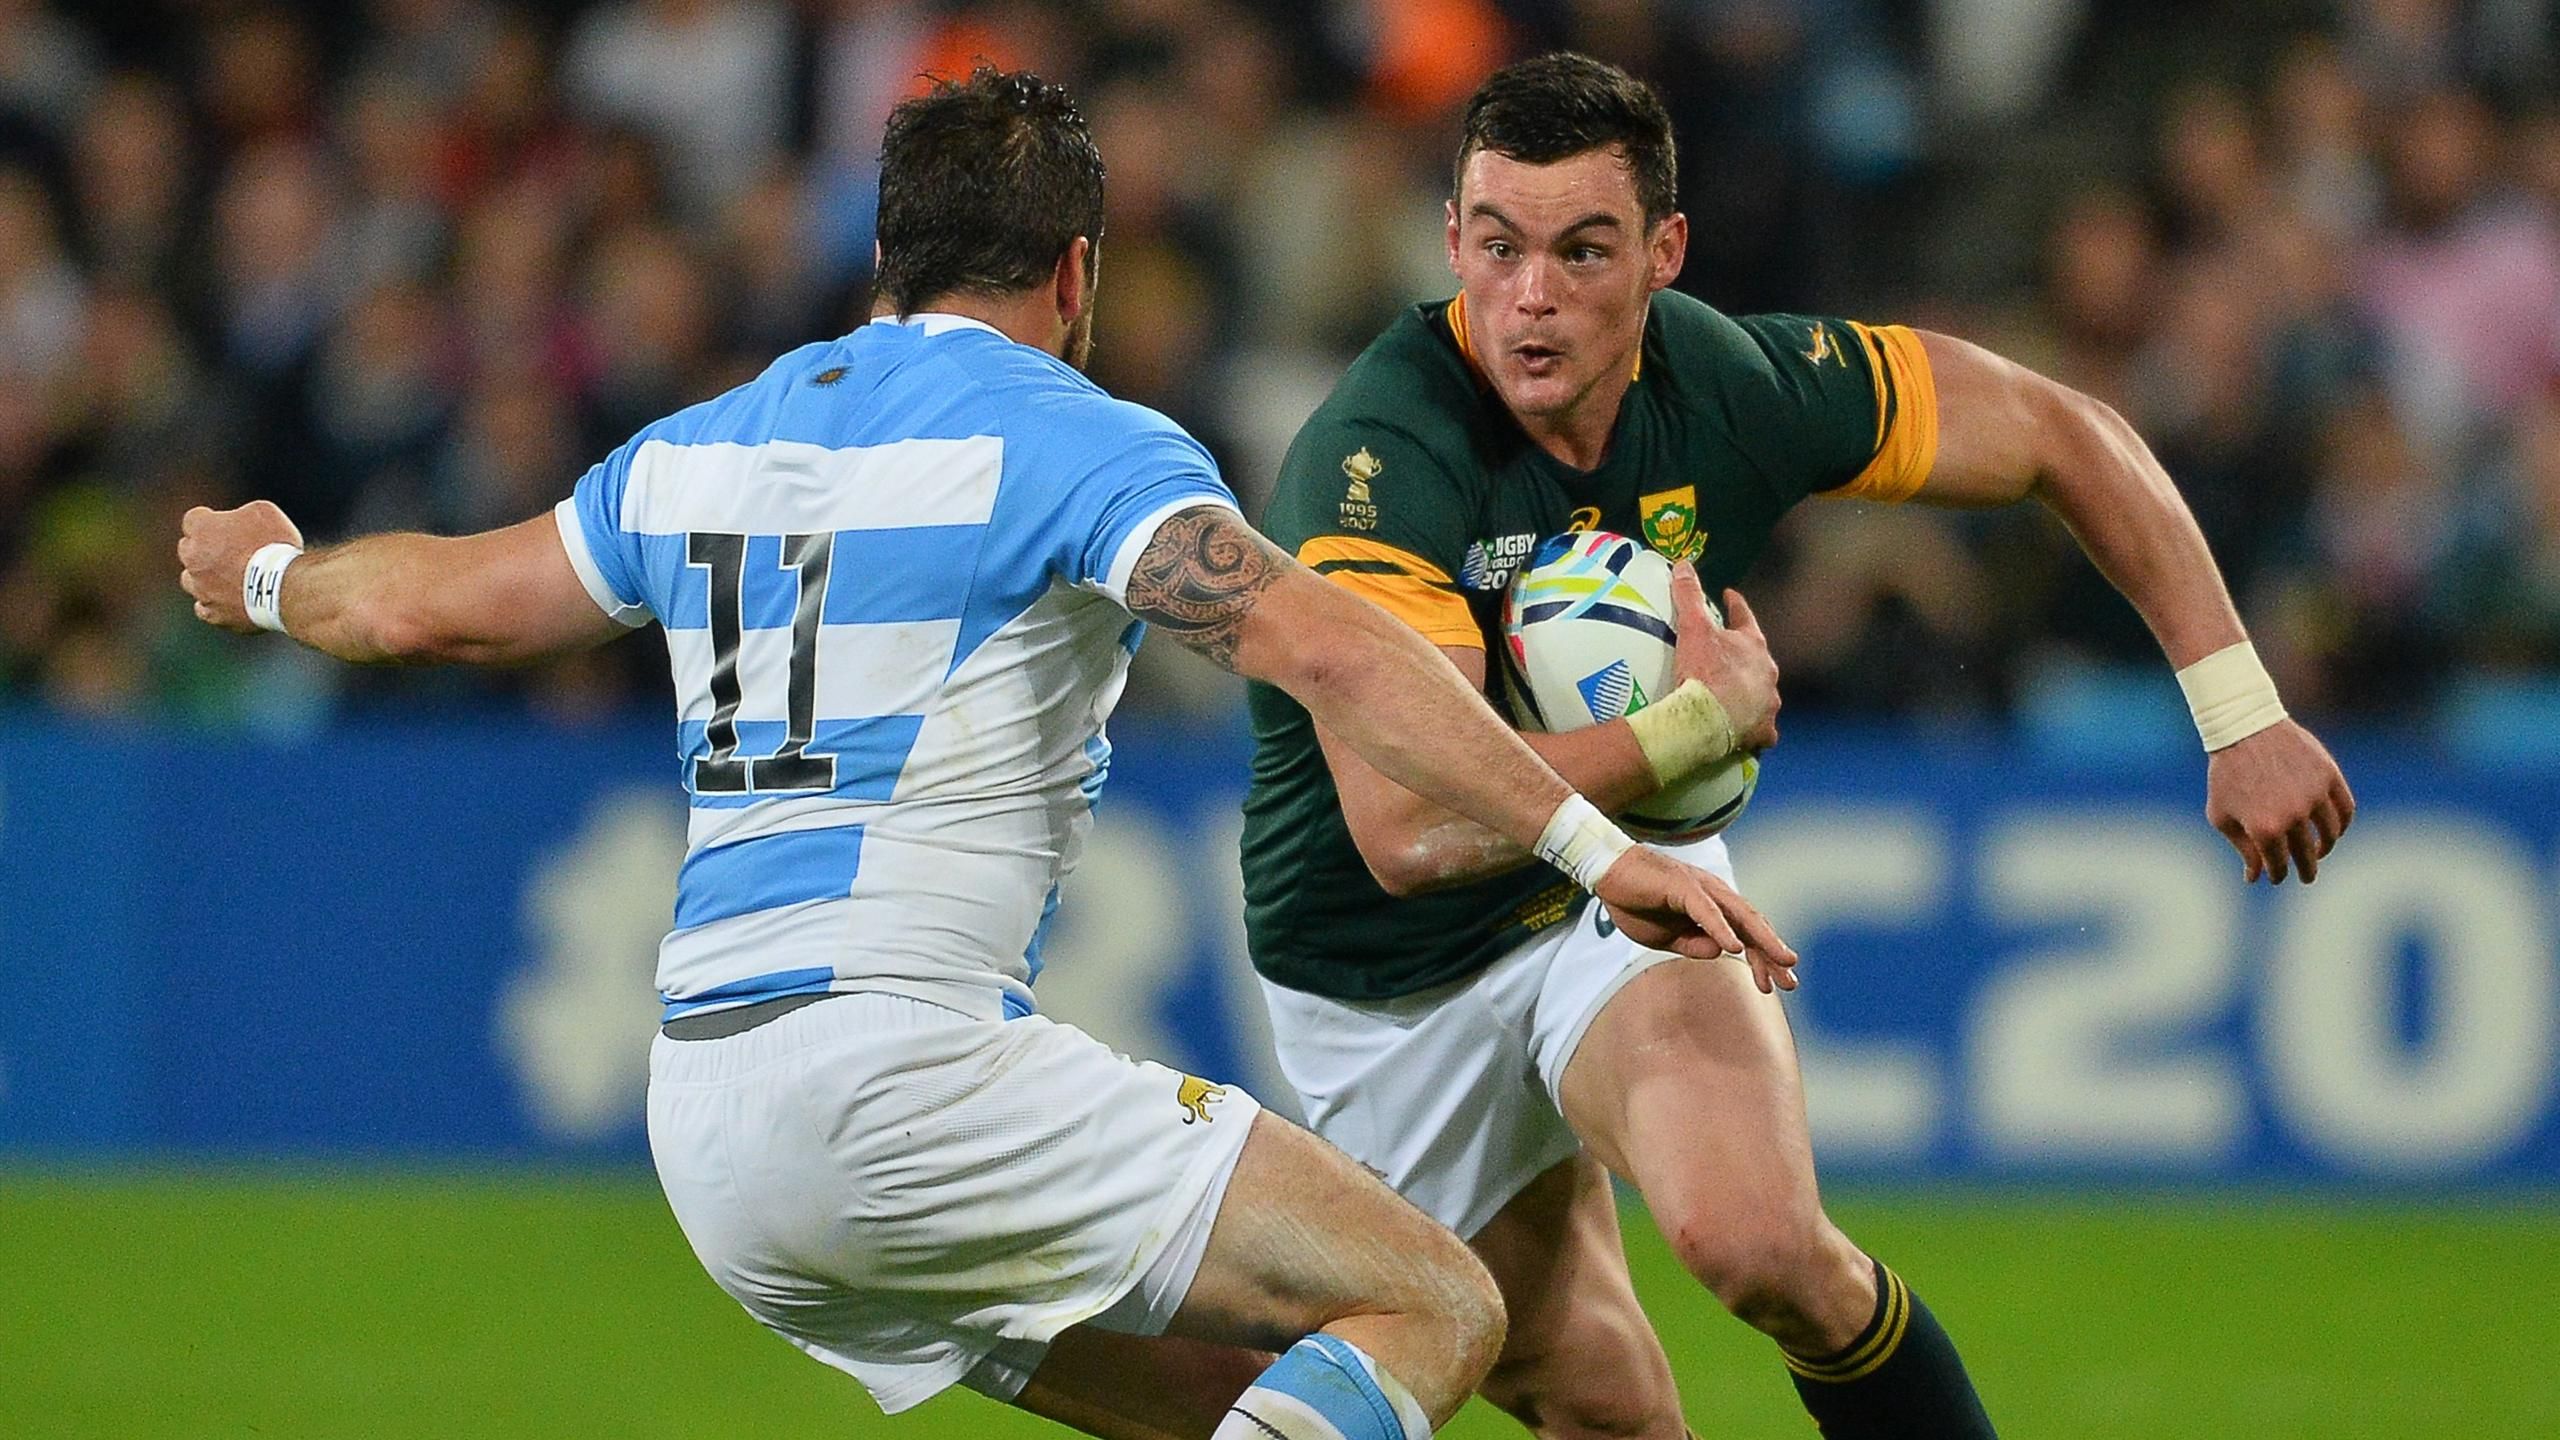 de Rugby: Sudáfrica se cuelga bronce ante Argentina (24-13) - Eurosport